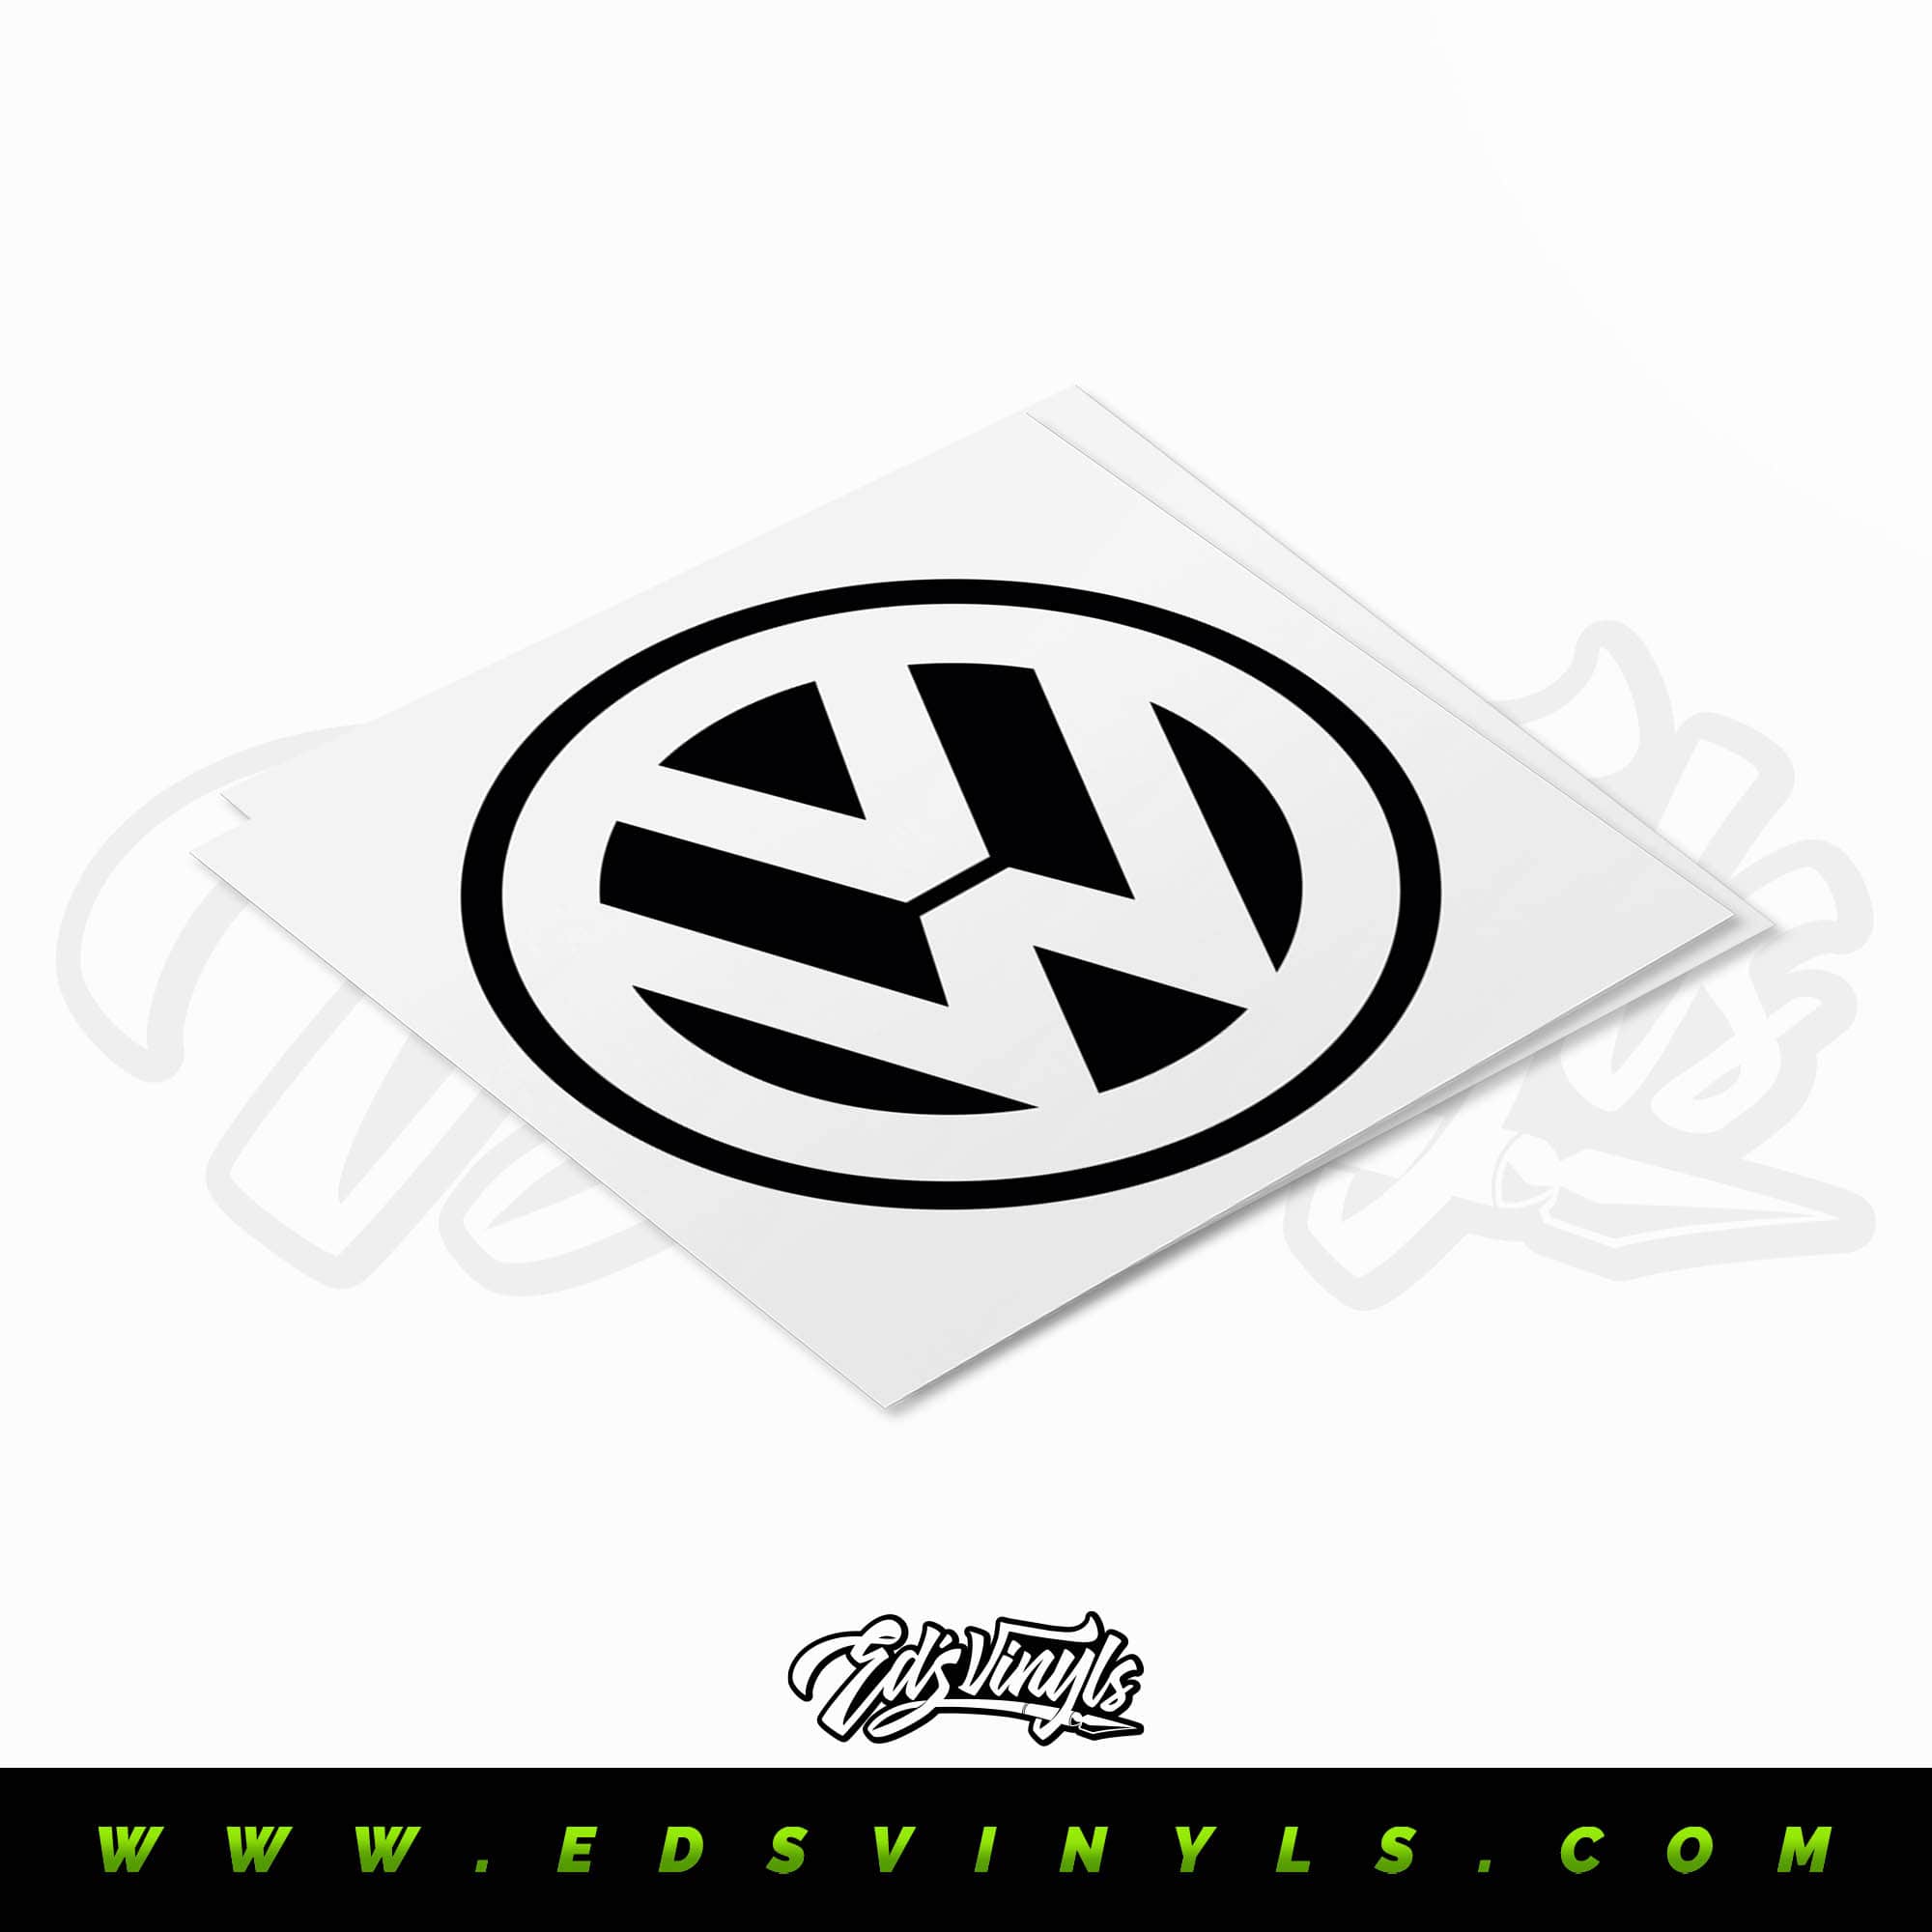 https://edsvinyls.com/wp-content/uploads/2020/03/ref-017-Volkswagen-logo-min.jpg